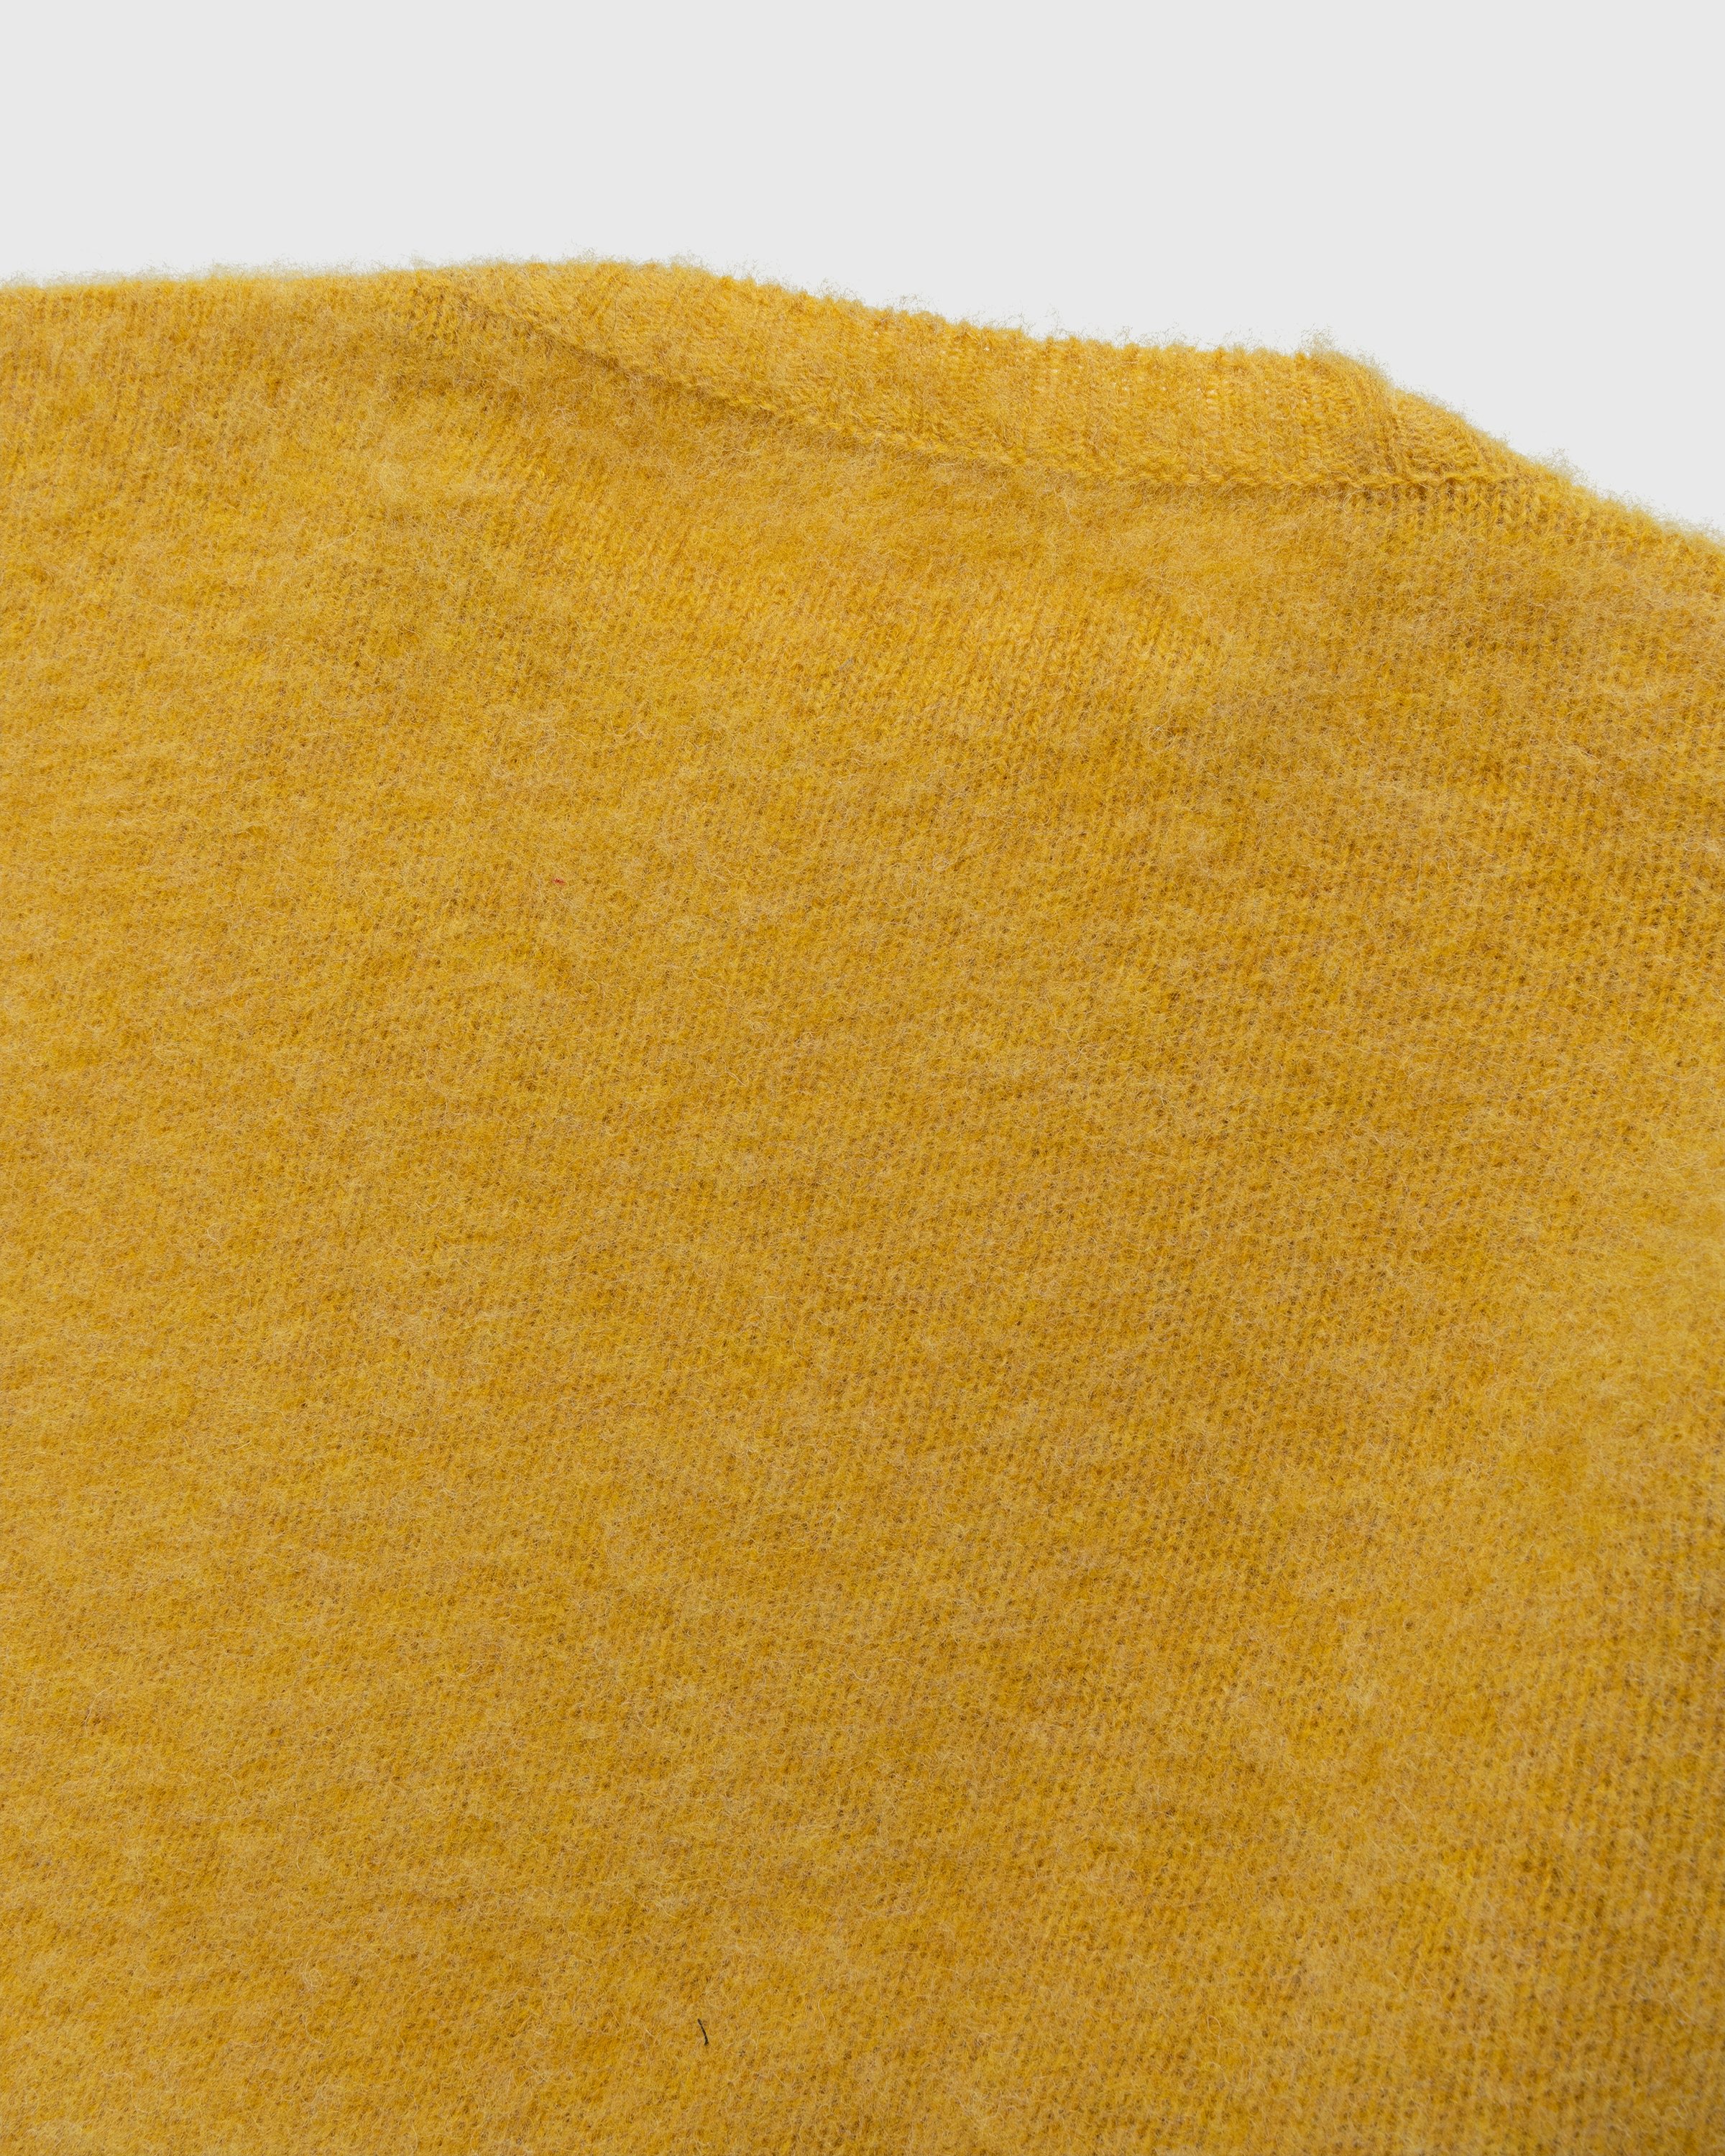 J. Press x Highsnobiety - Shaggy Dog Solid Sweater Yellow - Clothing - Yellow - Image 4